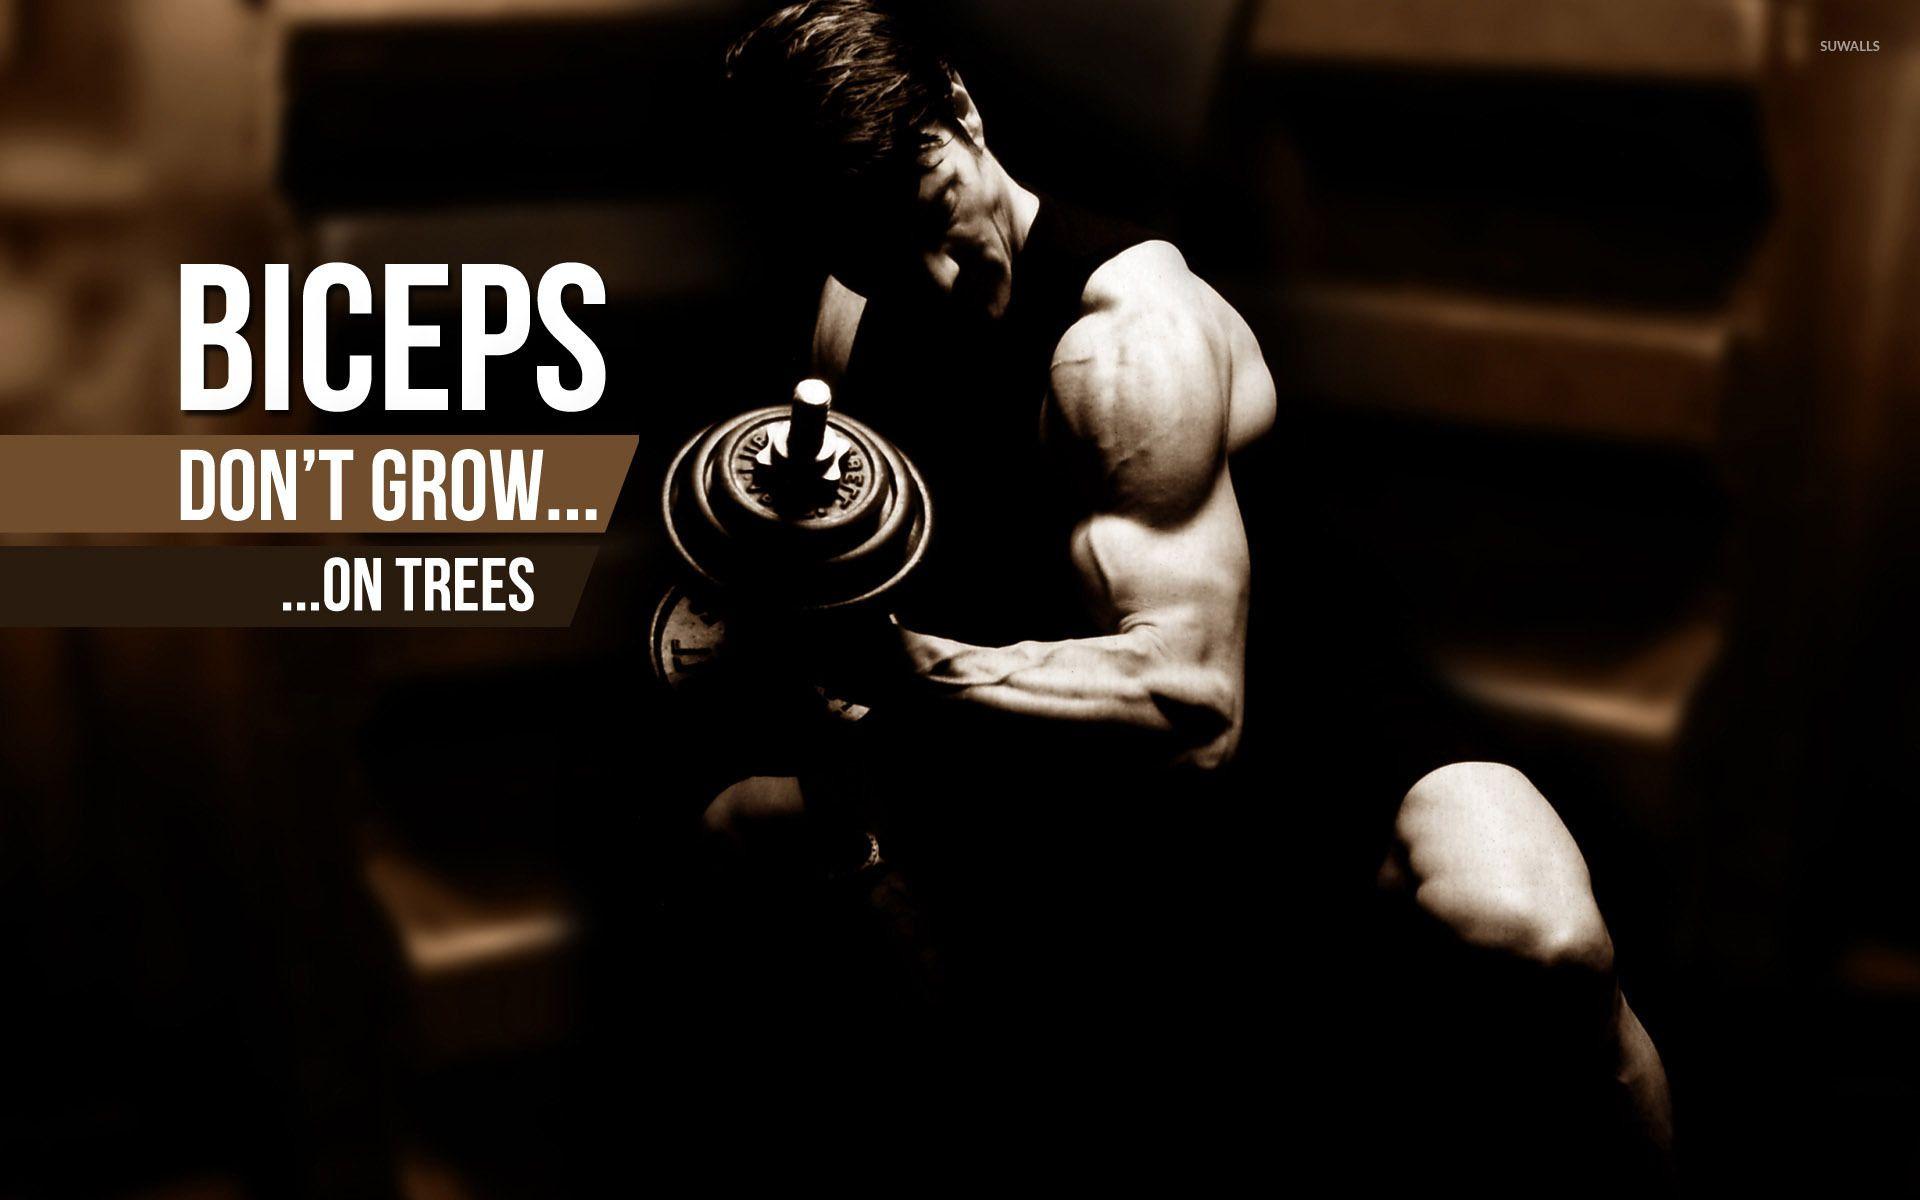 Biceps don't grow on trees wallpaper wallpaper